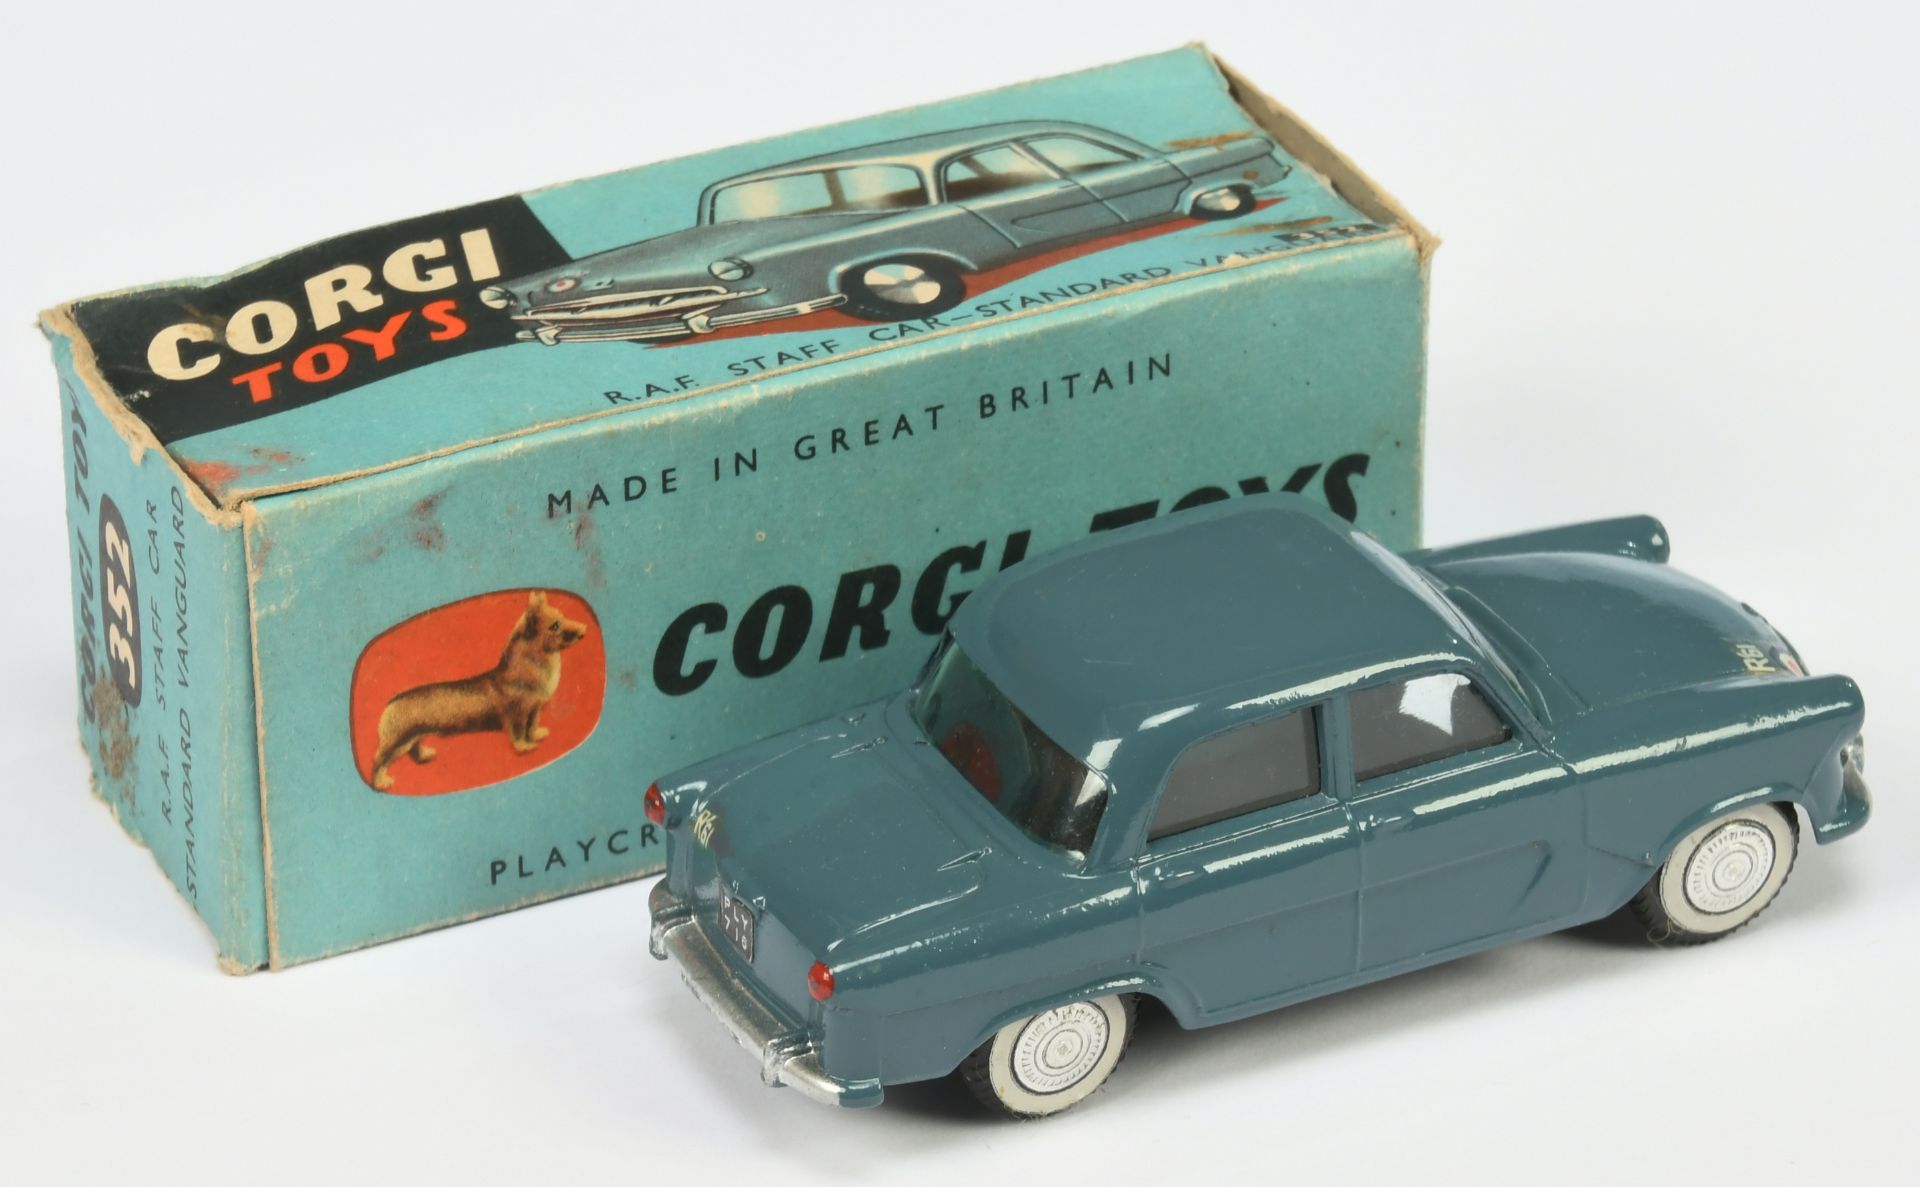 Corgi Toys 352 Standard Vanguard "RAF" Car - Greyish-blue, silver trim, flat spun hubs (Accessory... - Bild 2 aus 2